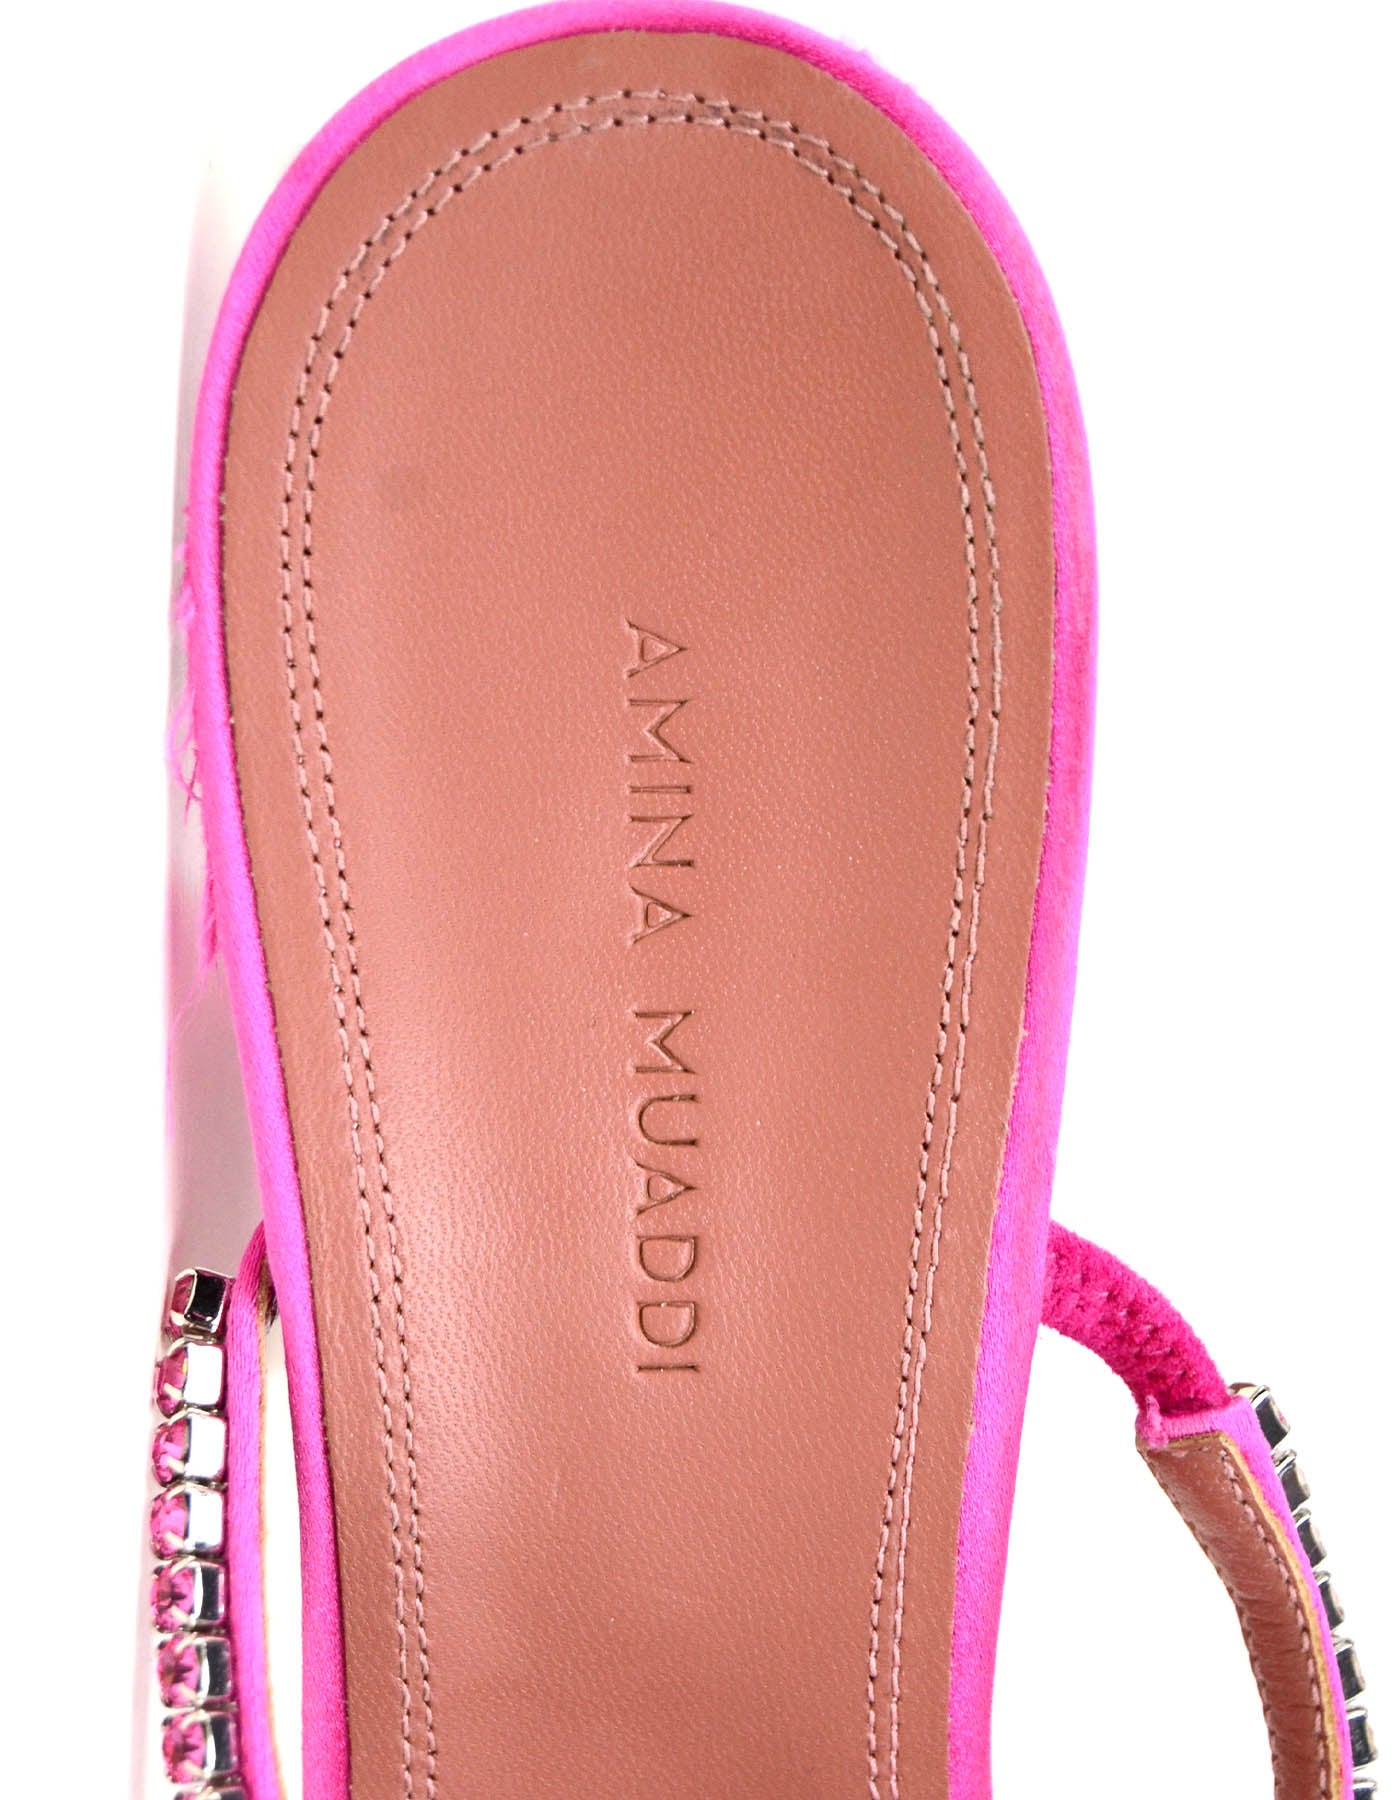 Amina Muaddi 2020 Pink Gilda Embellished Sandals Slides sz 39